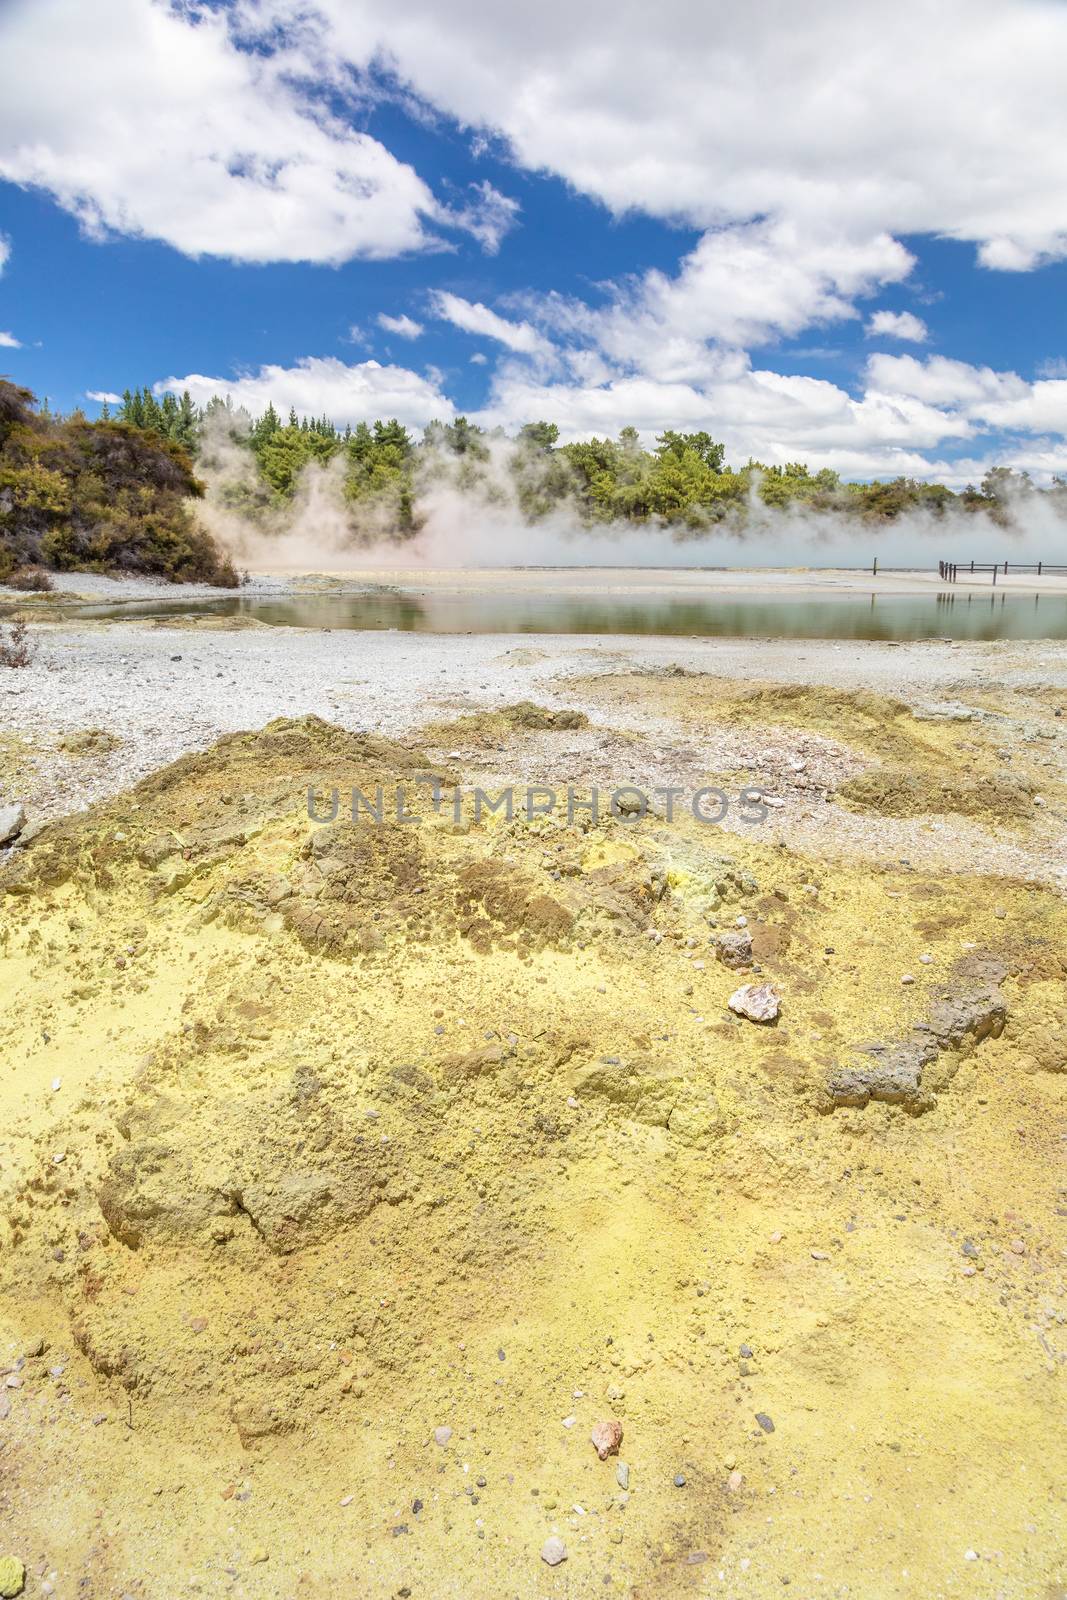 An image of geothermal activity at Rotorua in New Zealand